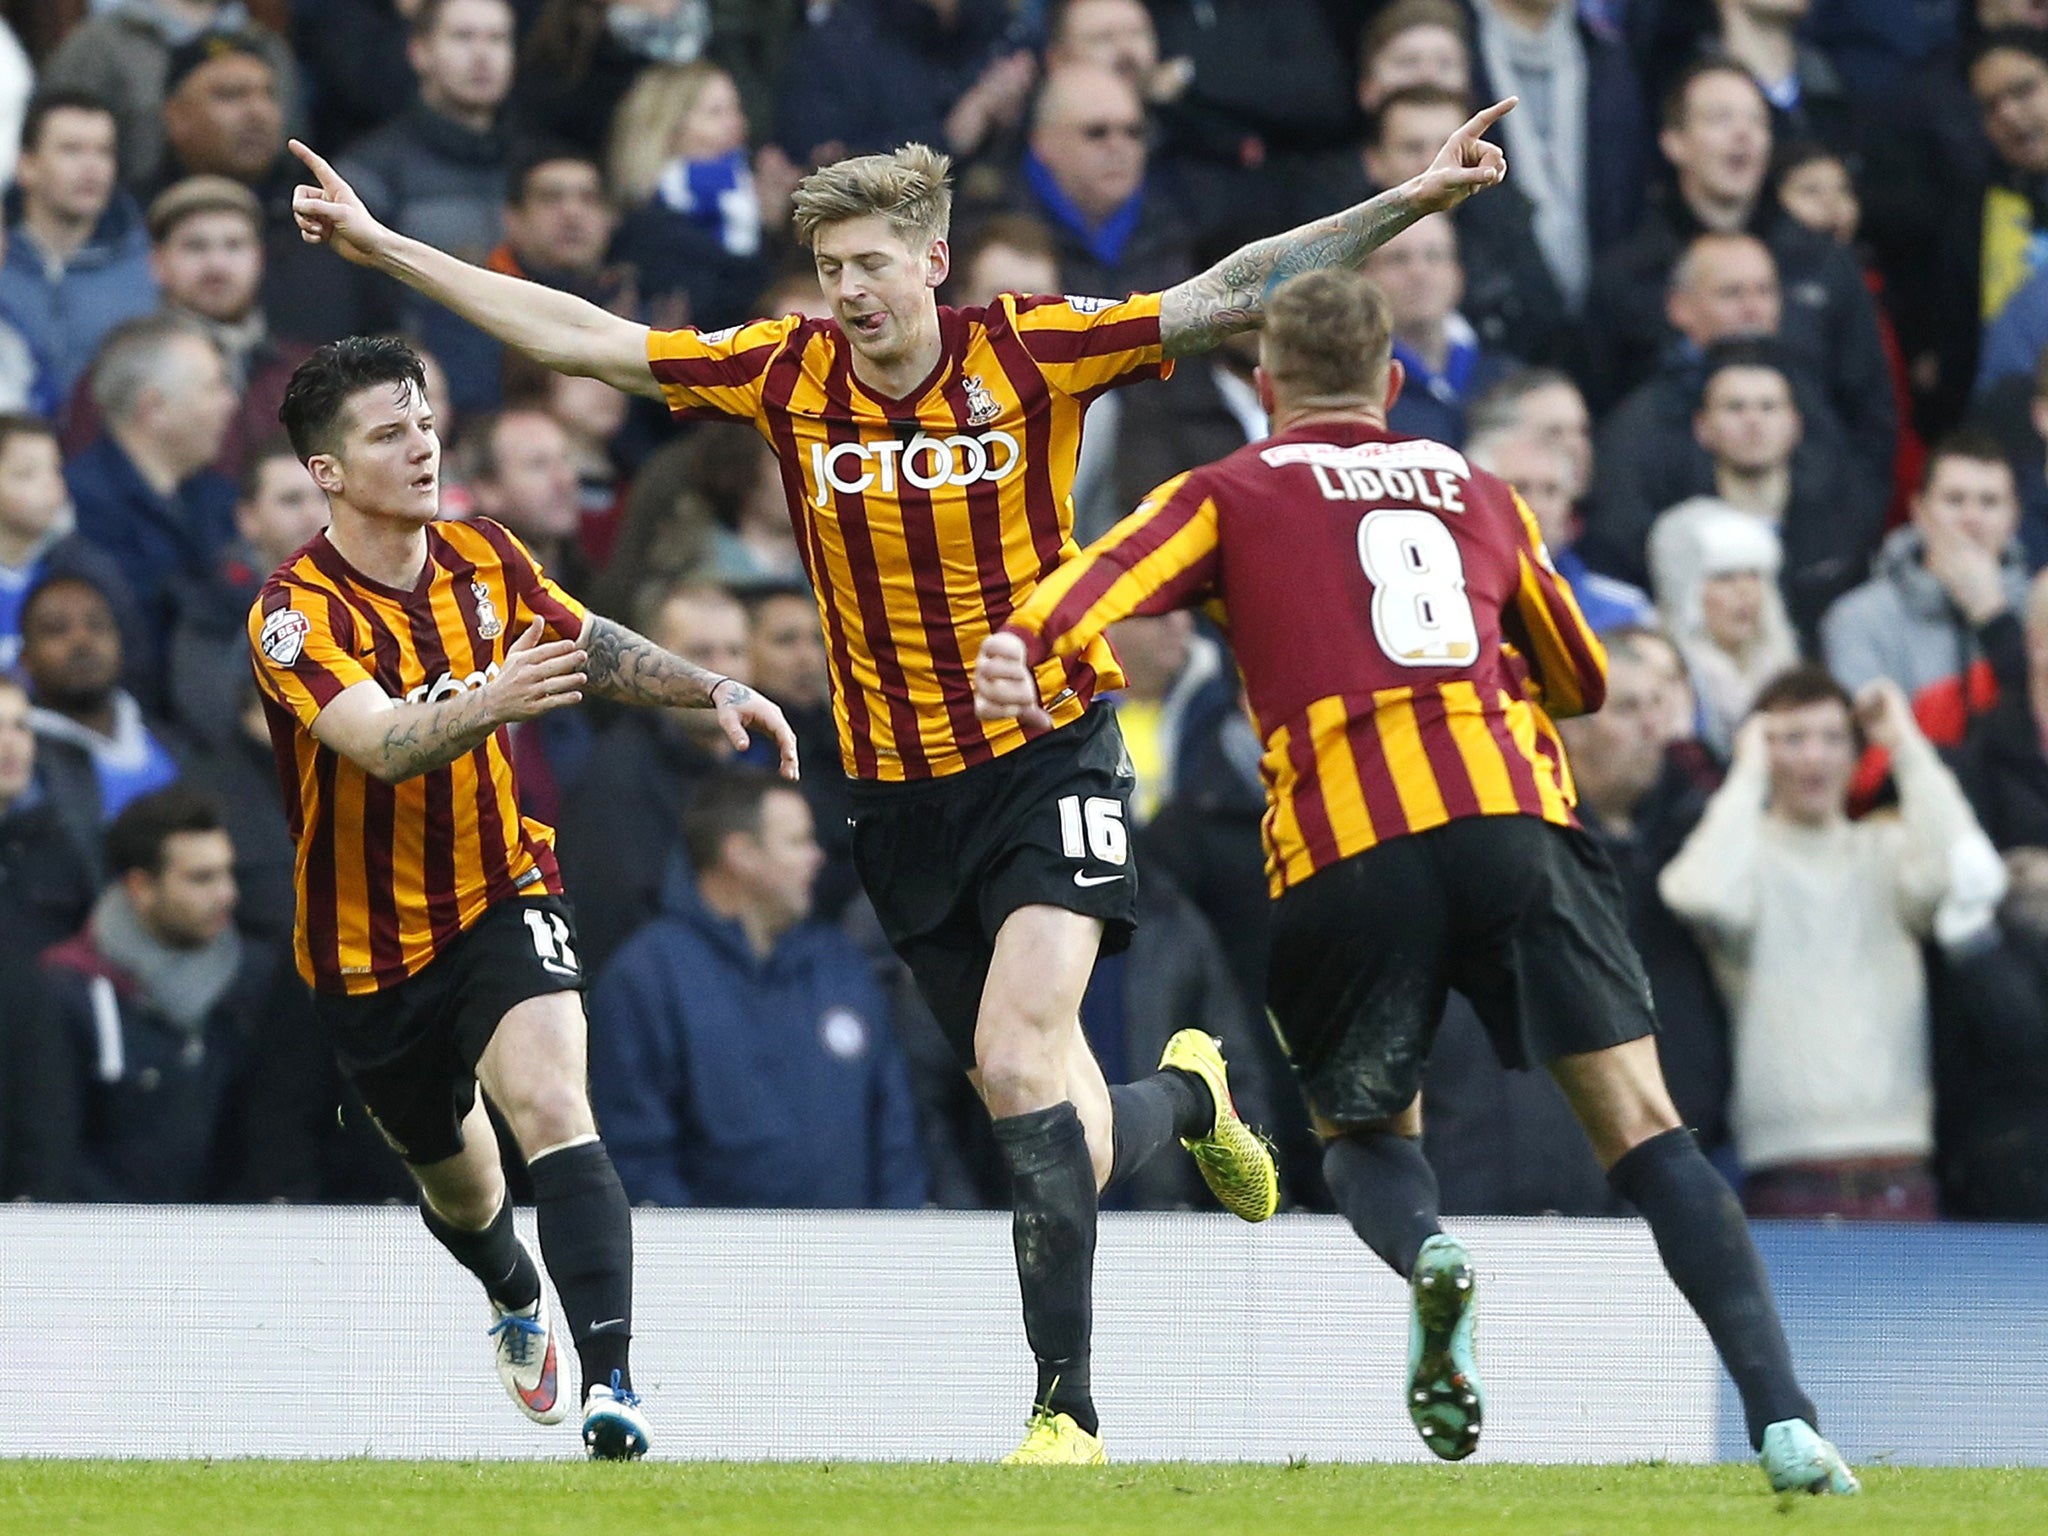 Jon Stead celebrates scoring against Chelsea in Bradford's FA Cup victory